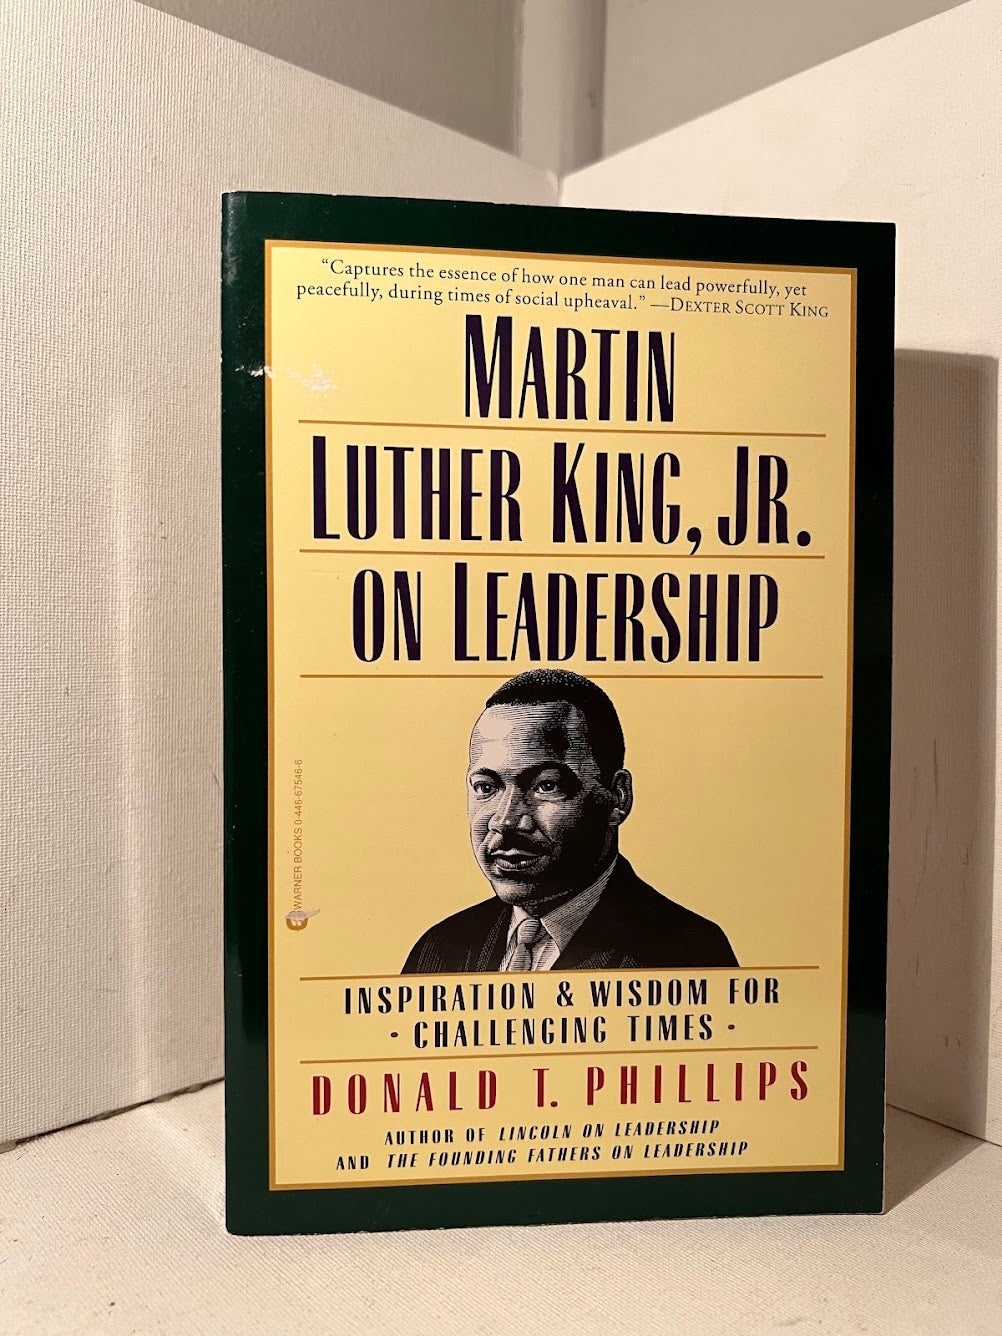 Martin Luther King, Jr. on Leadership